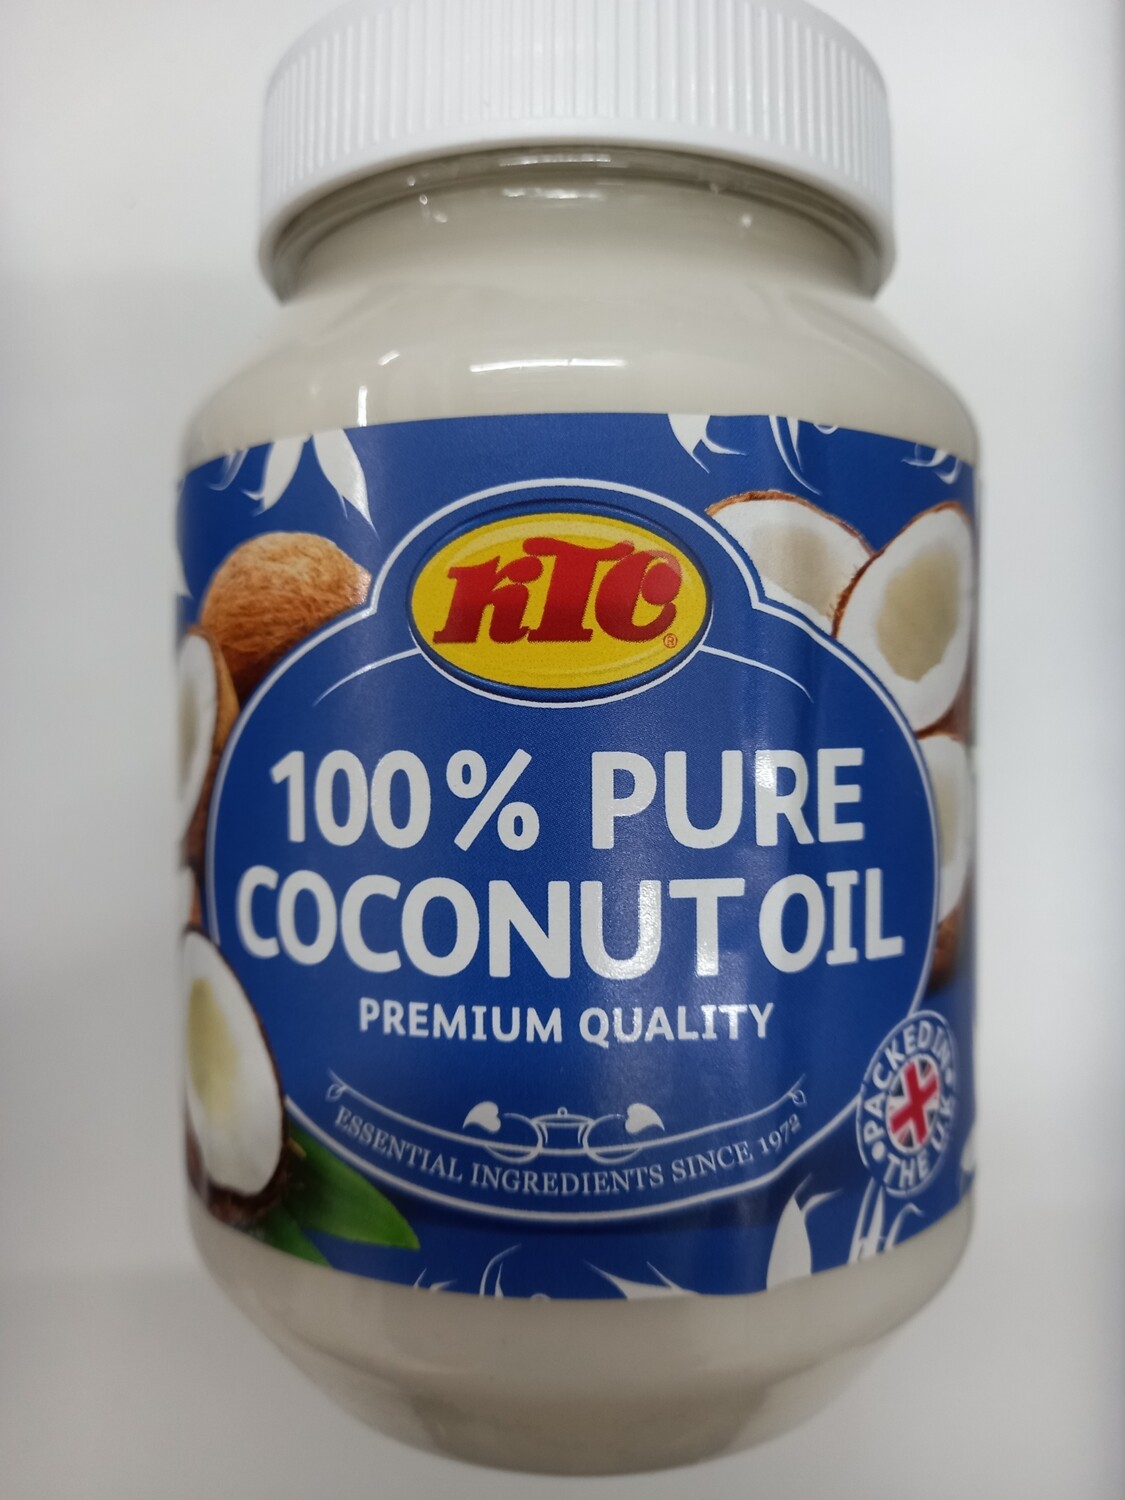 KTC 100% Pure Coconut Oil Jar 500g